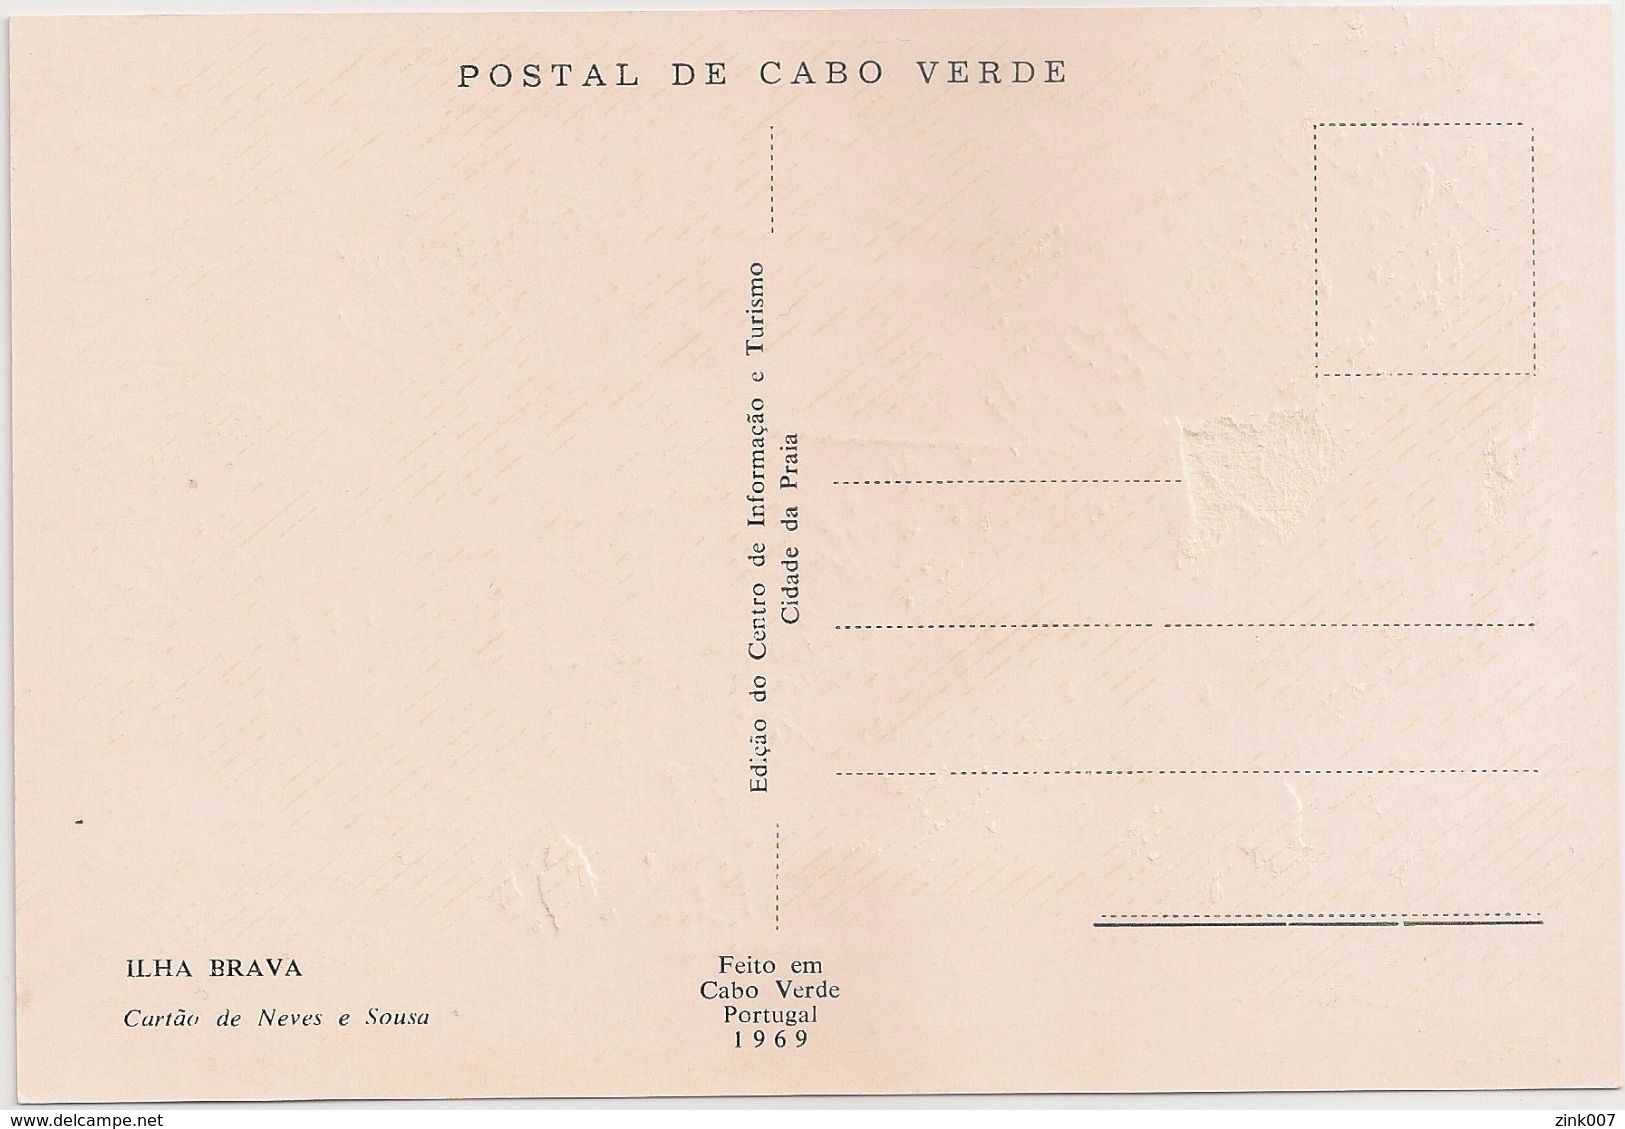 Postal Cabo Verde - Cape Verde - Ilha Brava - Carte Postale - Postcard - Gravura De Neves E Sousa - Cap Vert